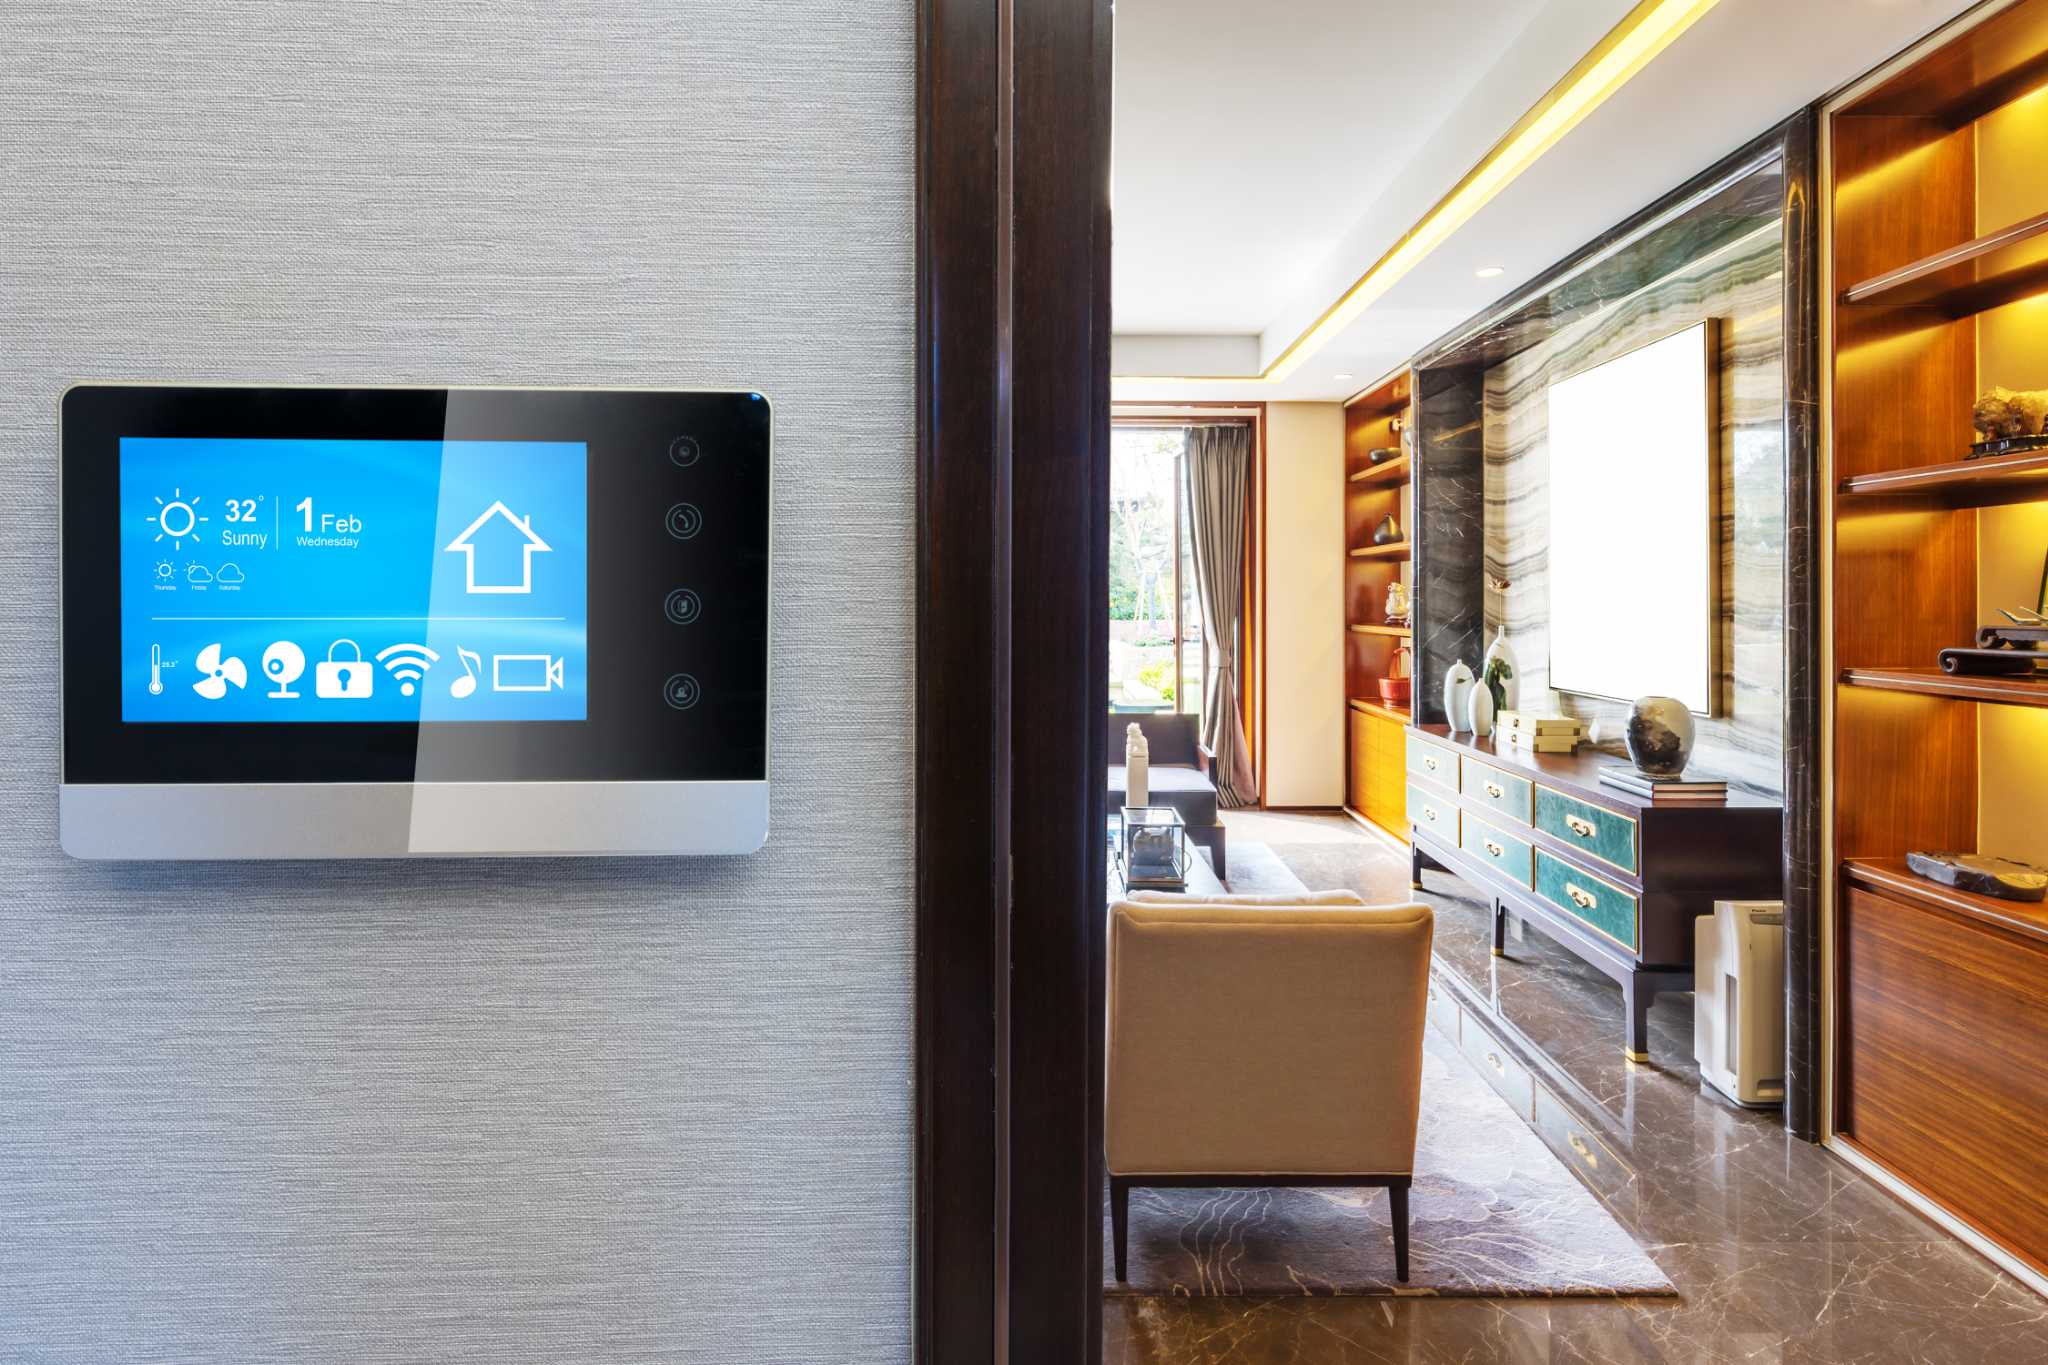 King Digital Room Thermostat BATTERY